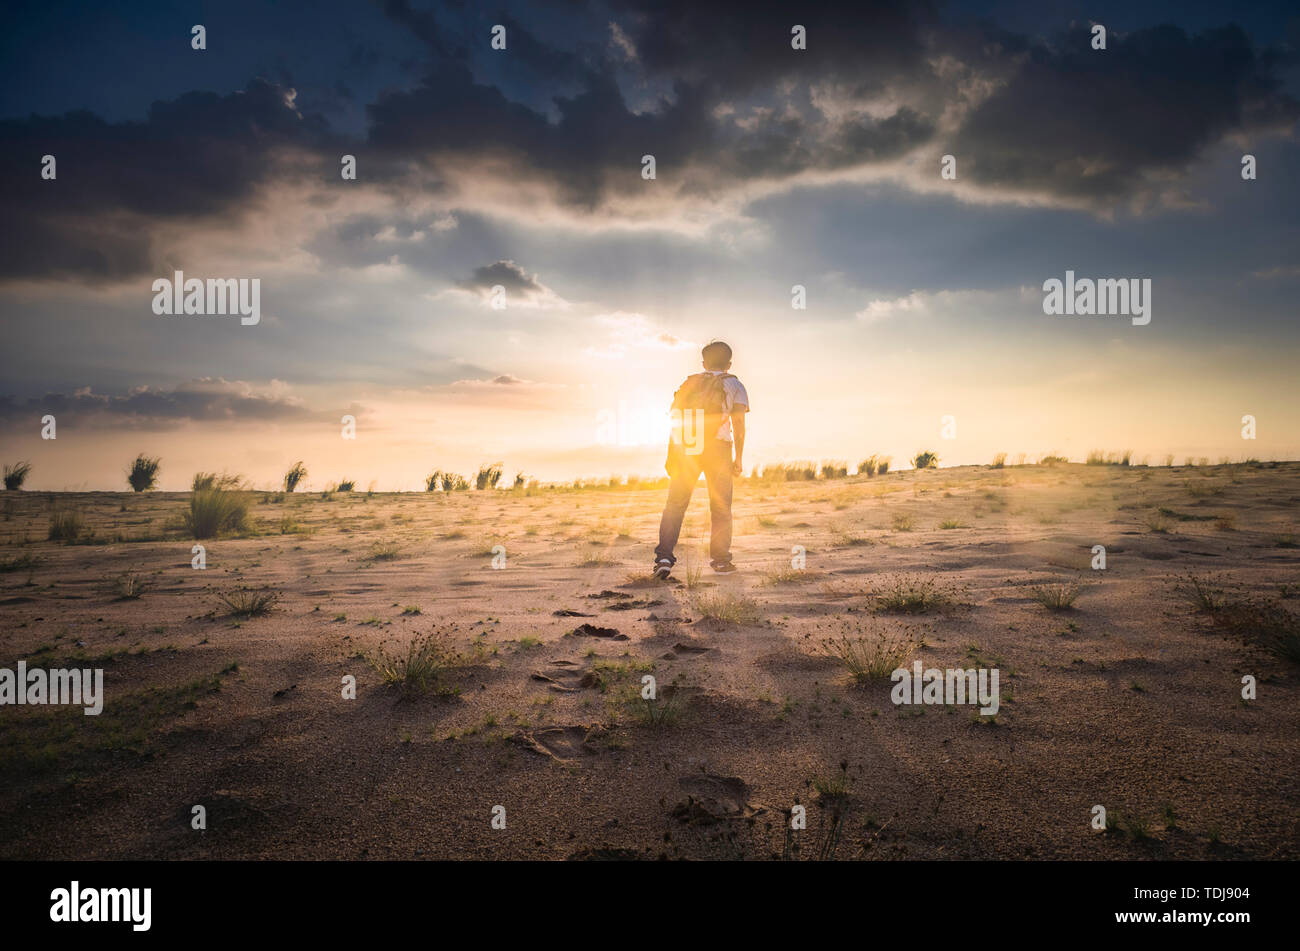 Outdoor desert sunset backlight man alone walking back shadow material Stock Photo